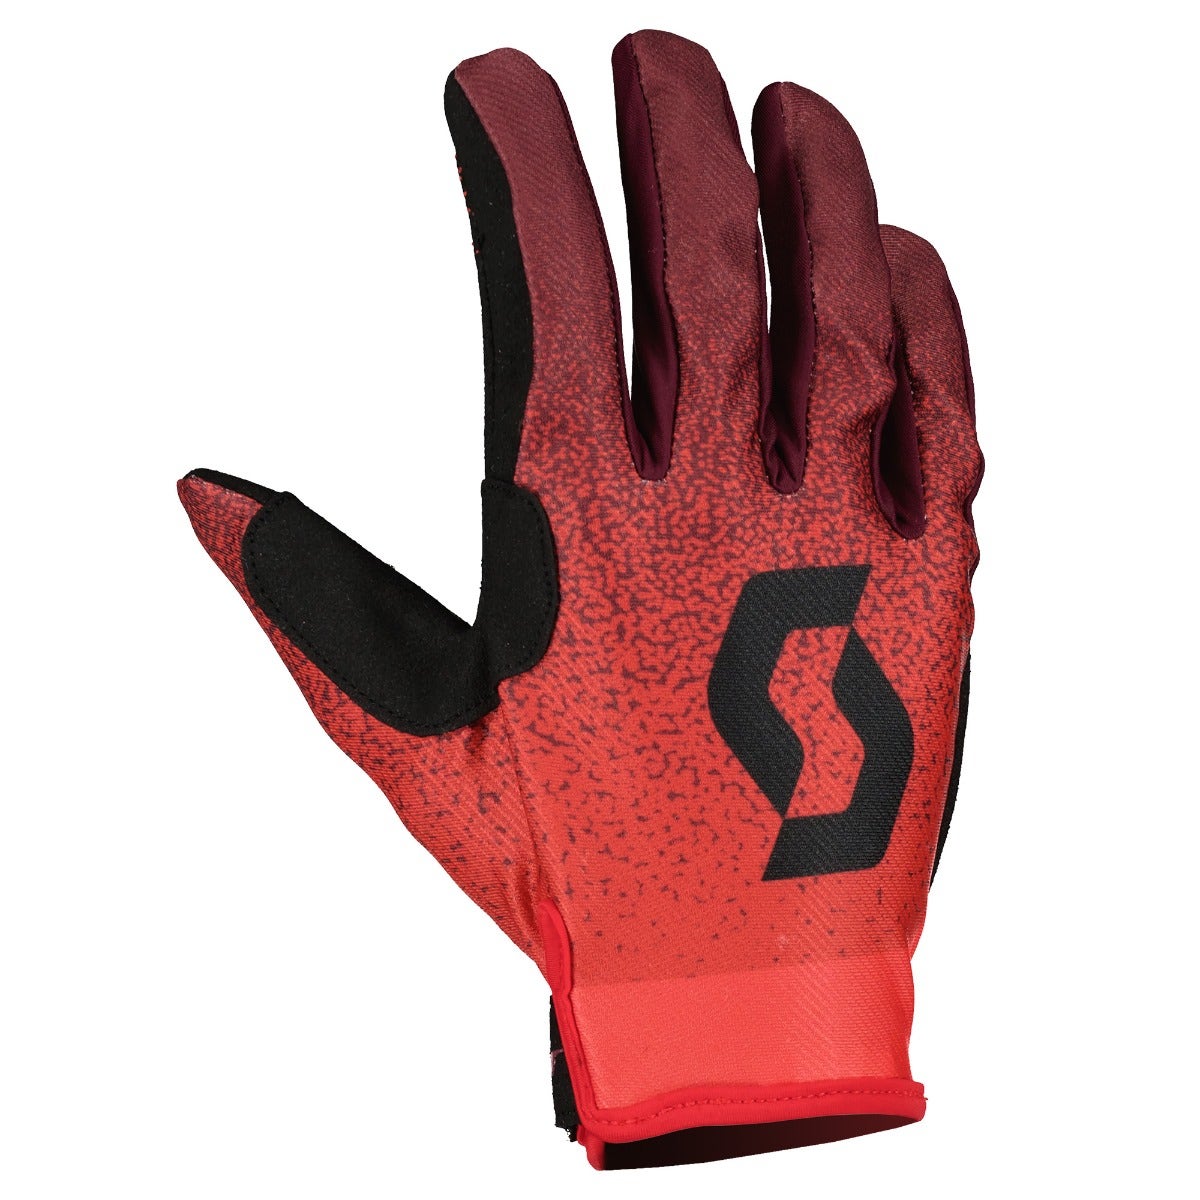 Scott YOUTH 350 Dirt Evo Glove Red/Black